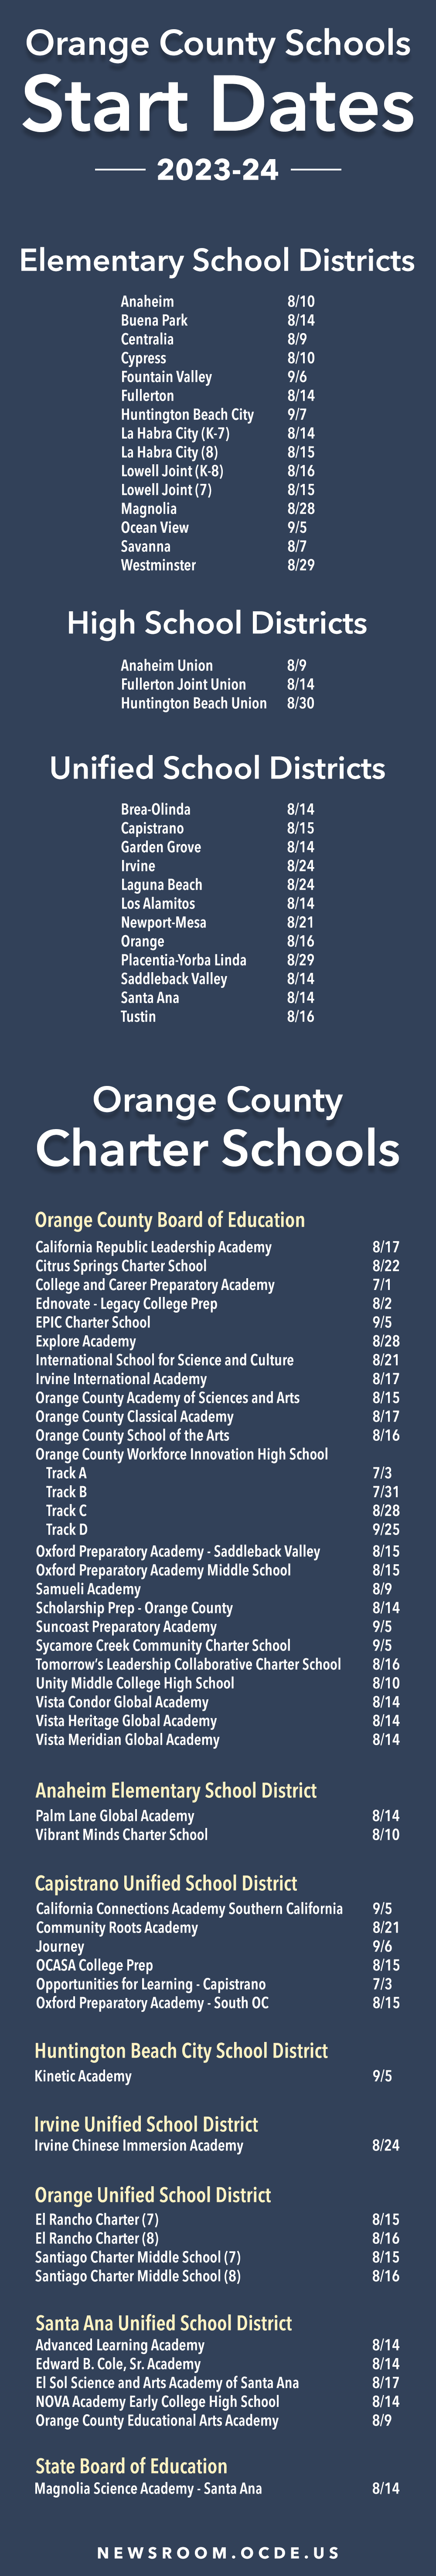 OC Schools Start Dates 2023-24